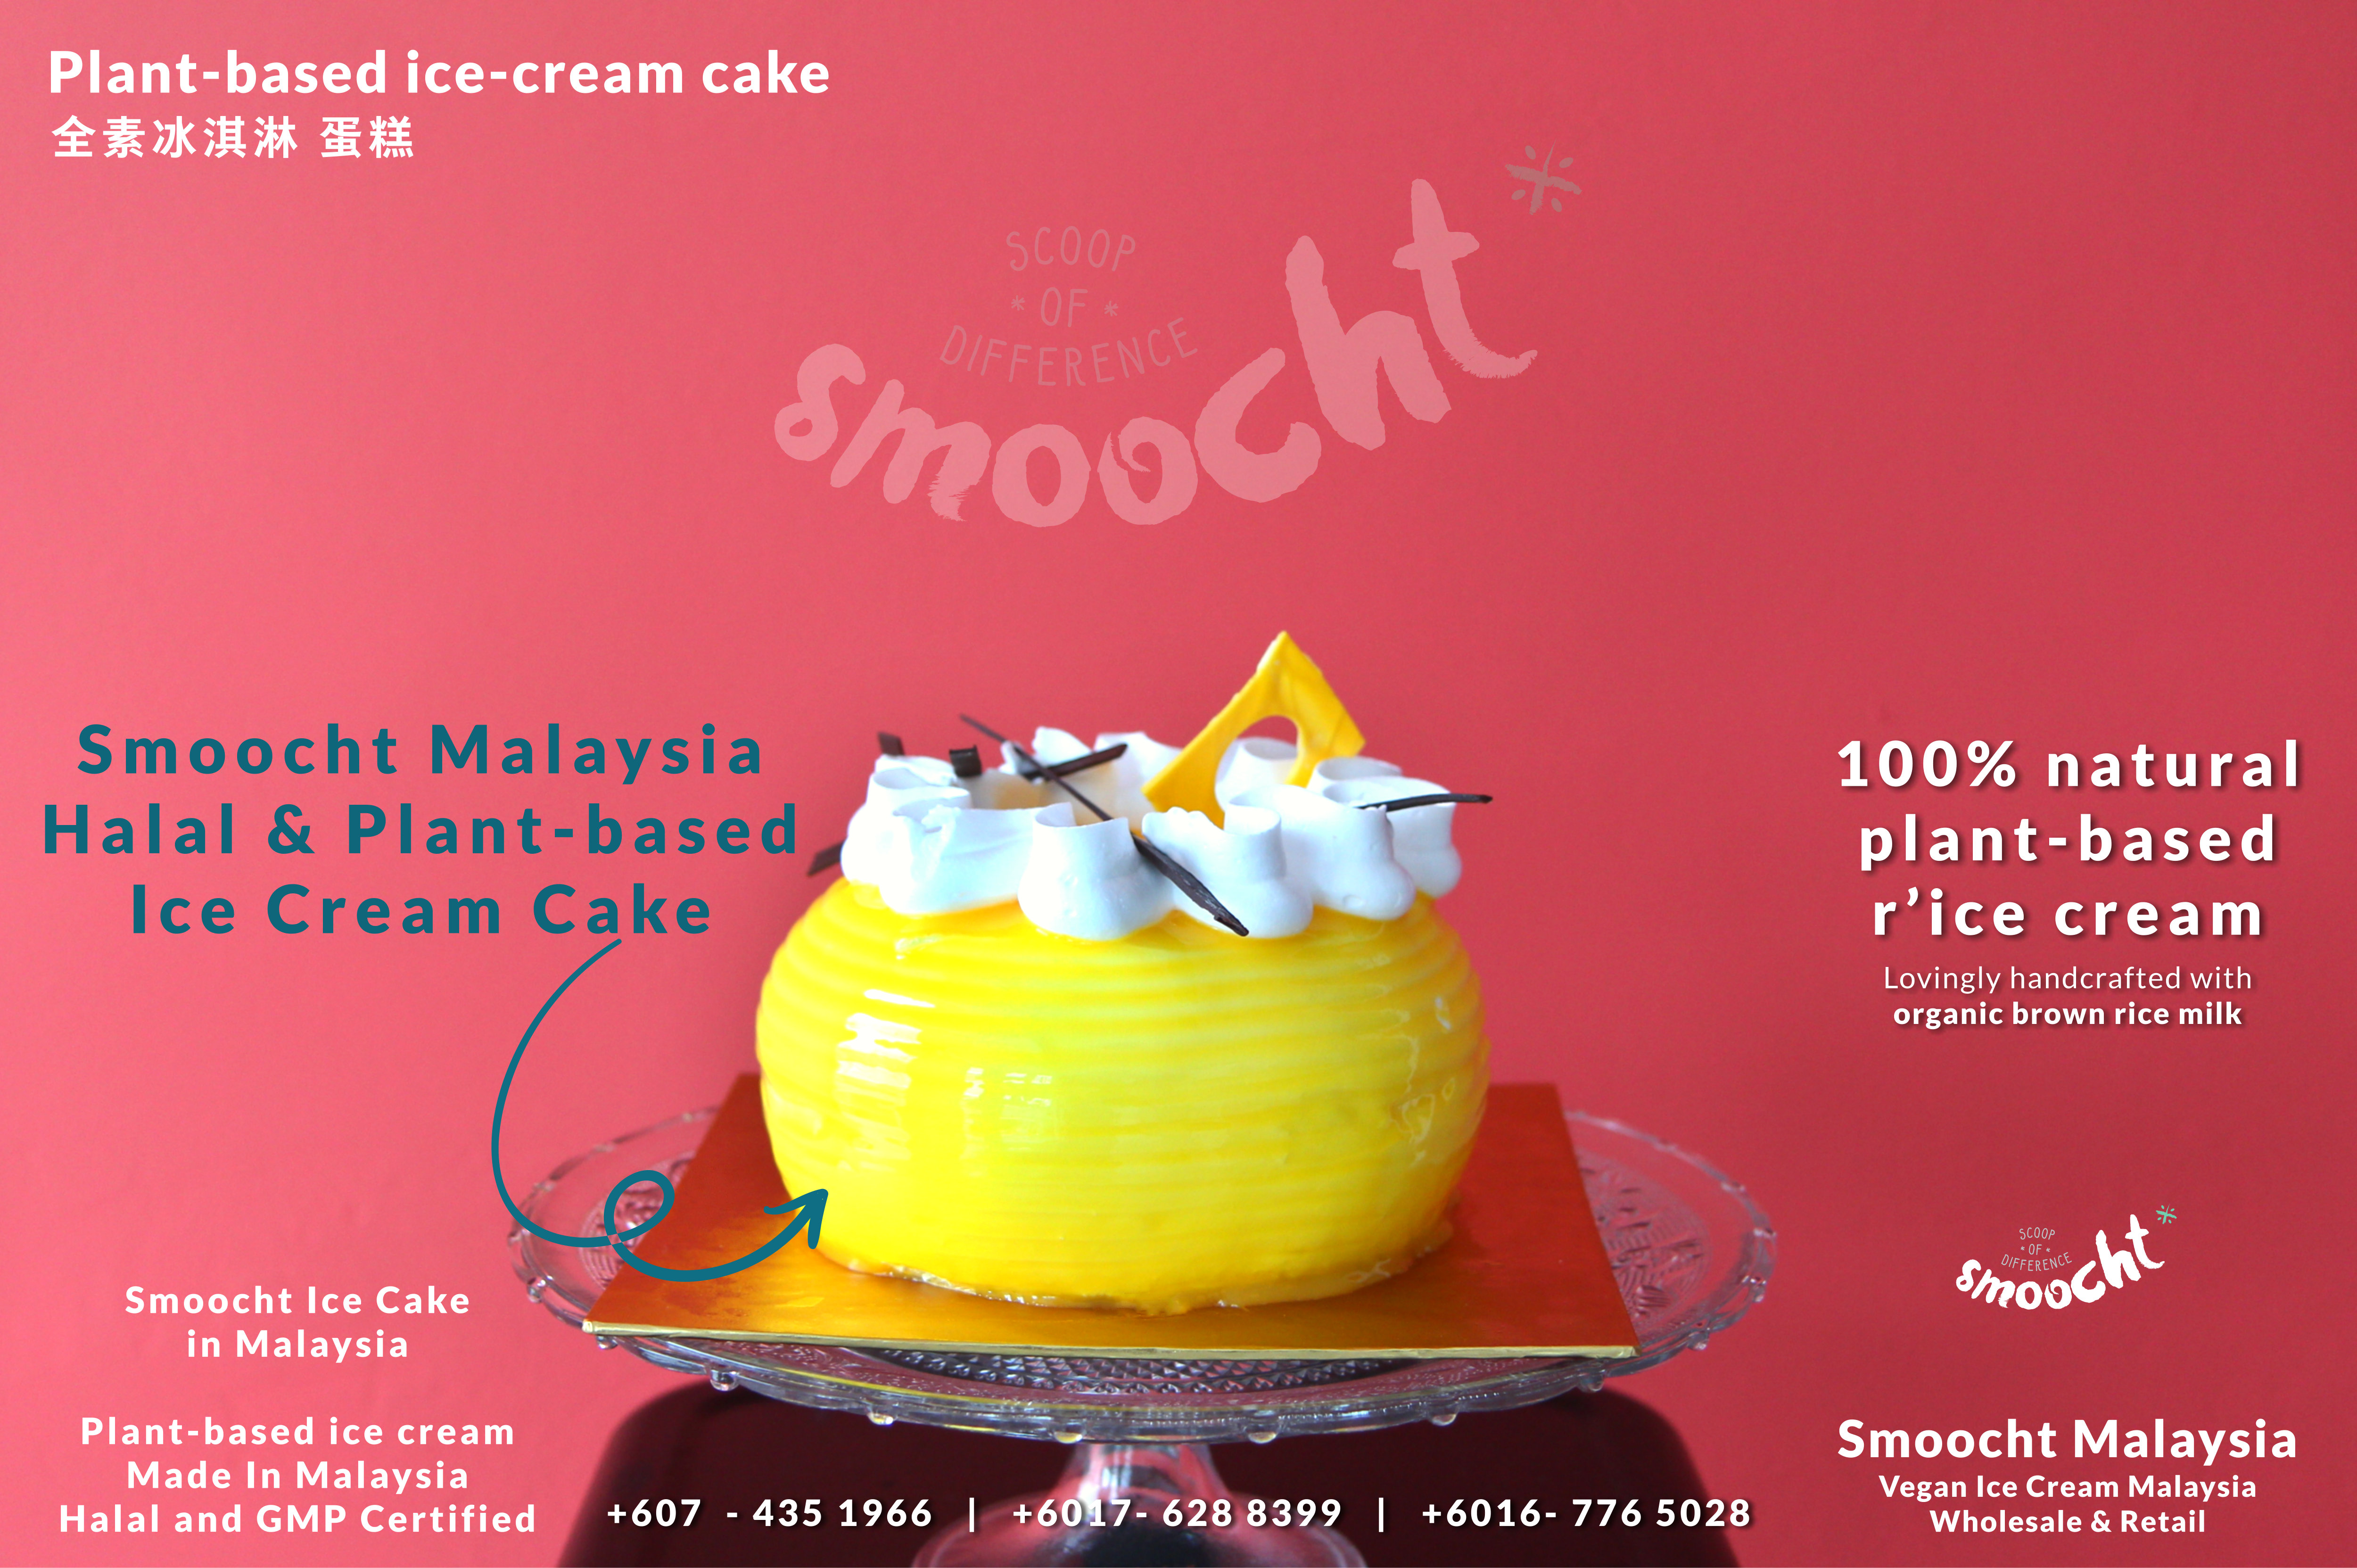 Smoocth Malaysia Vegan Plant based Ice Cream Malaysia at Batu Pahat Johor Malaysia Dessert Wholesale Ice Cream and Retail Ice Cream Plant-Based Products 全素蛋糕 全植蛋糕A02-004